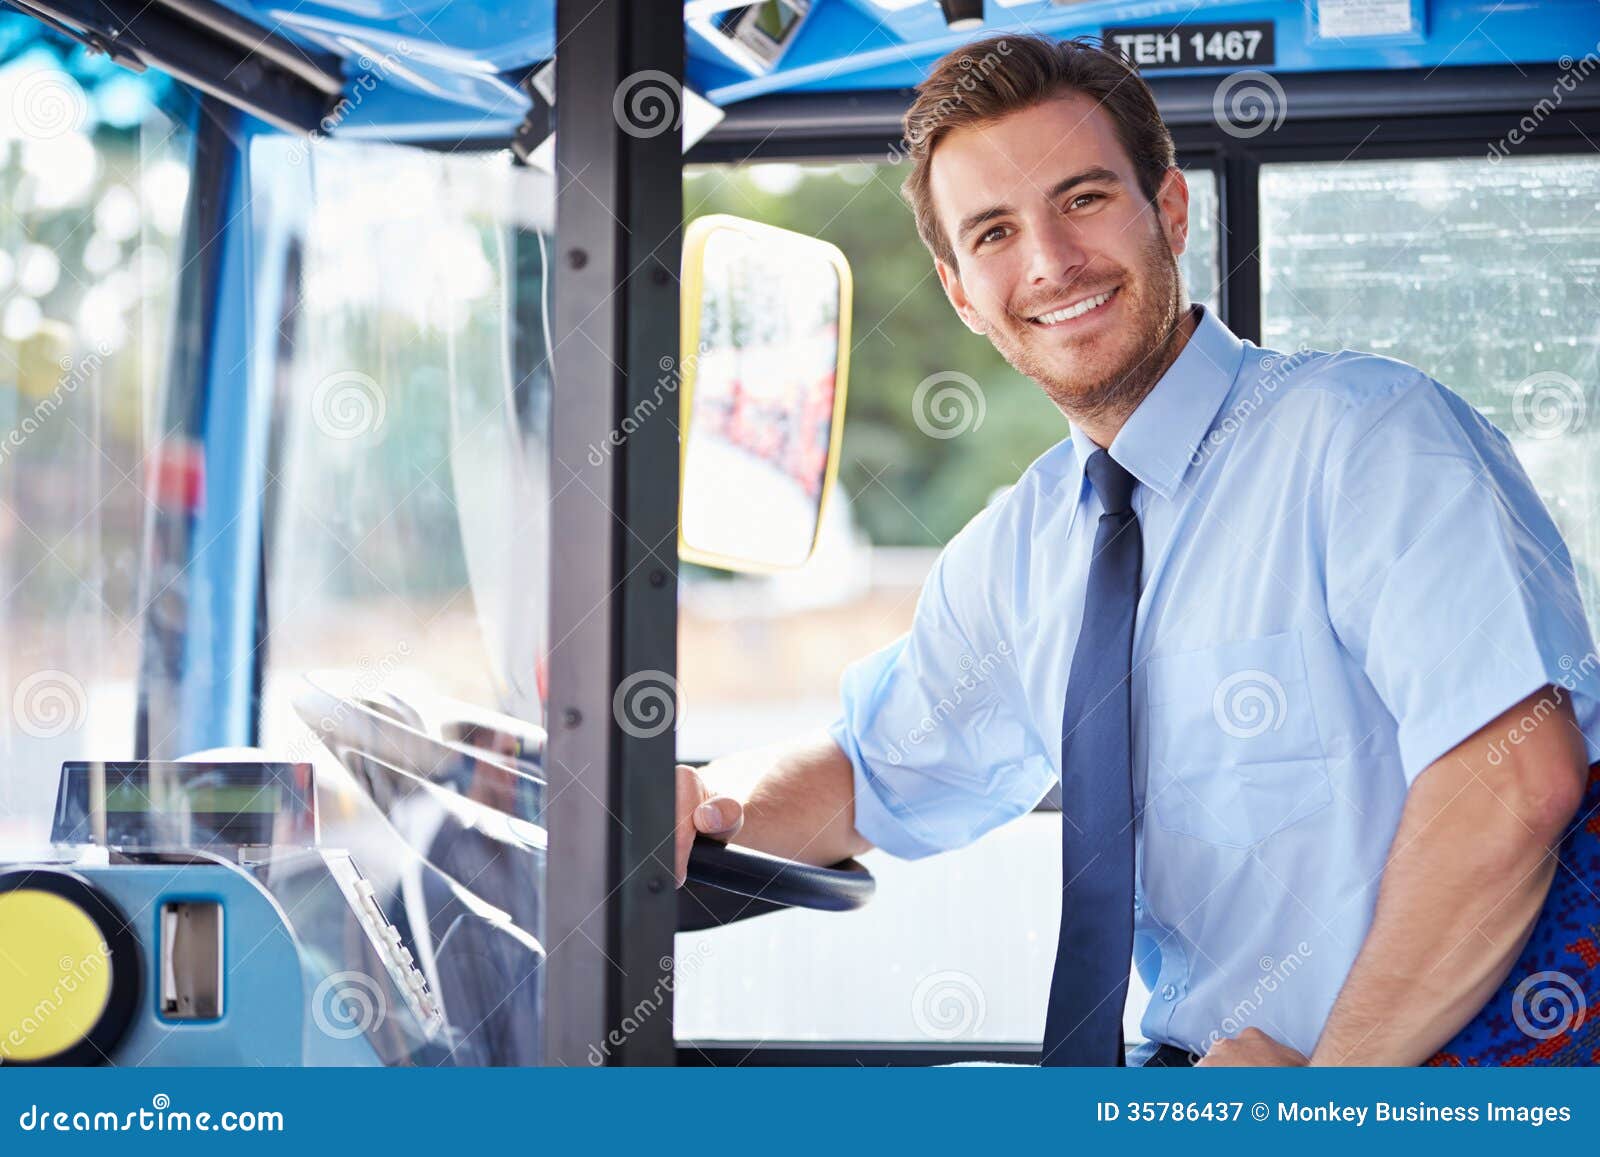 portrait of bus driver behind wheel